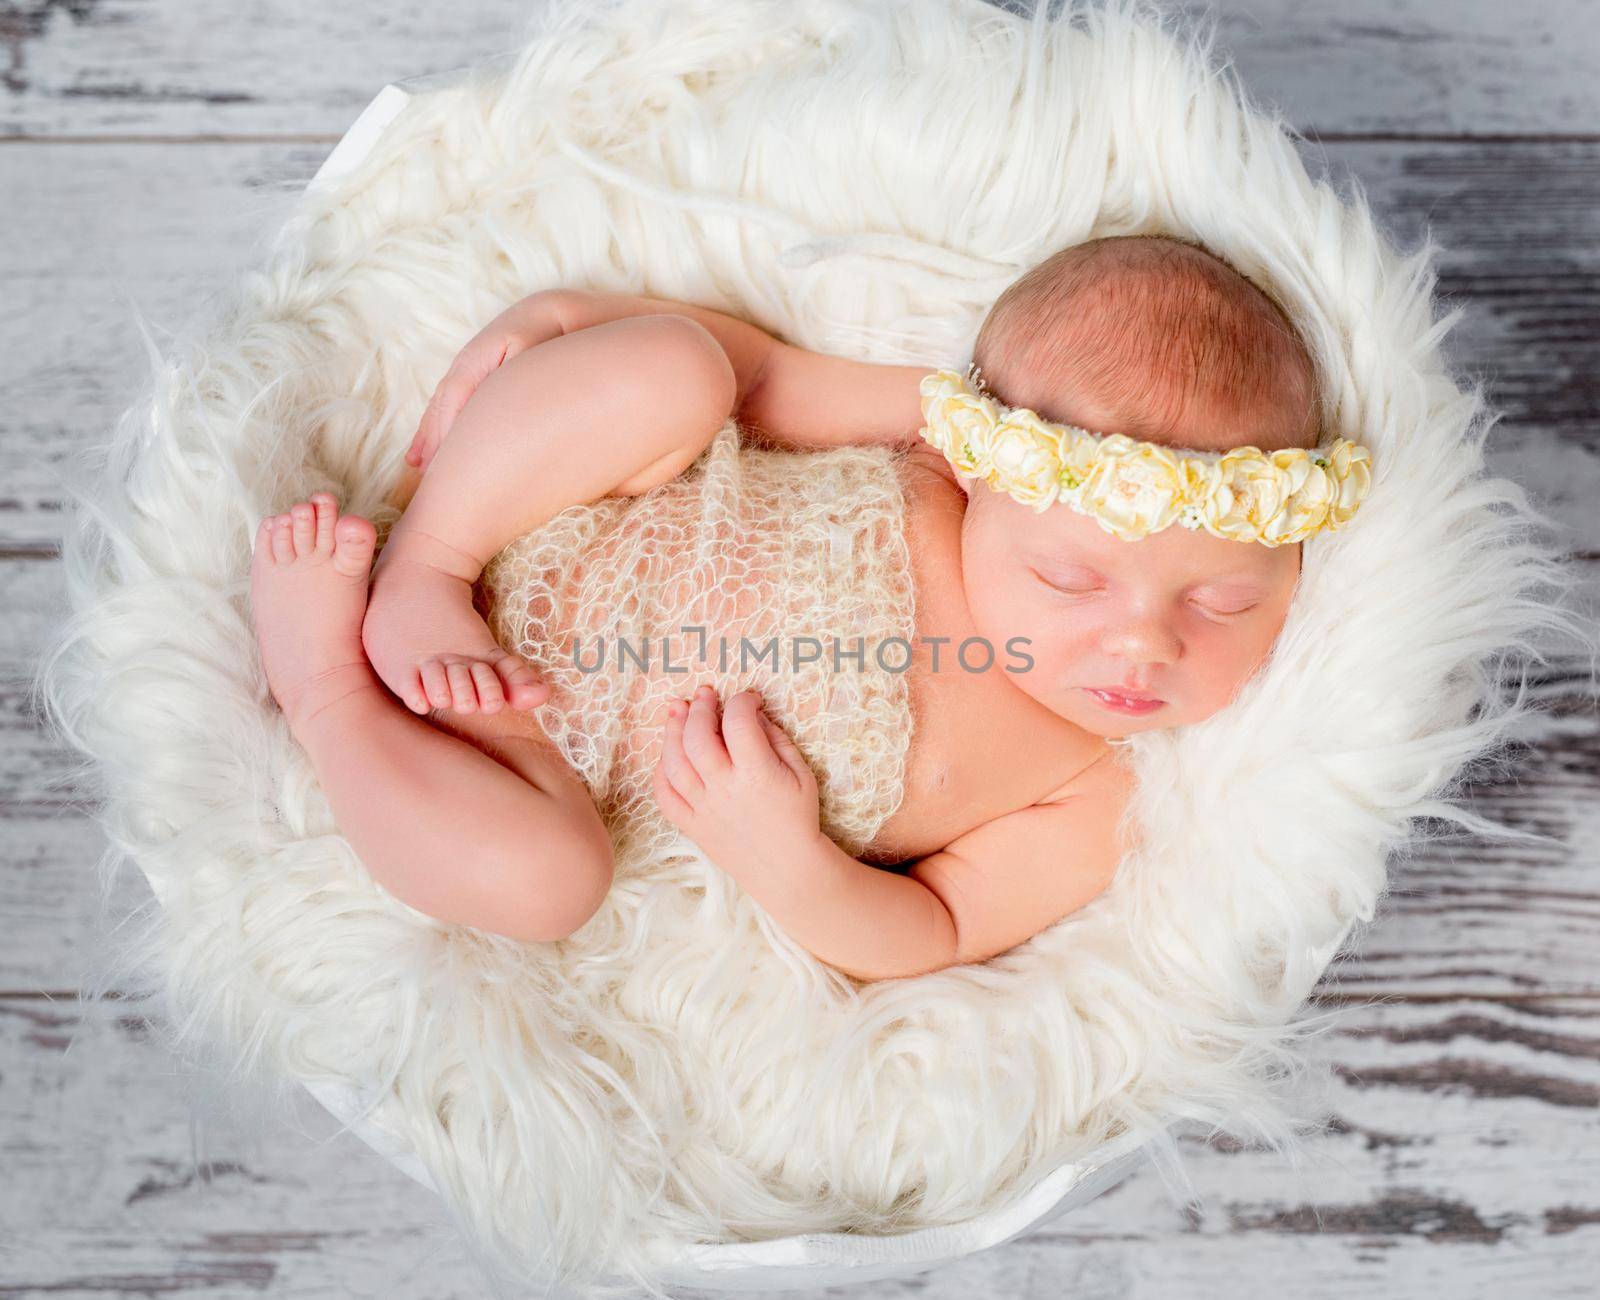 sleeping newborn girl on round bed in funy pose by tan4ikk1